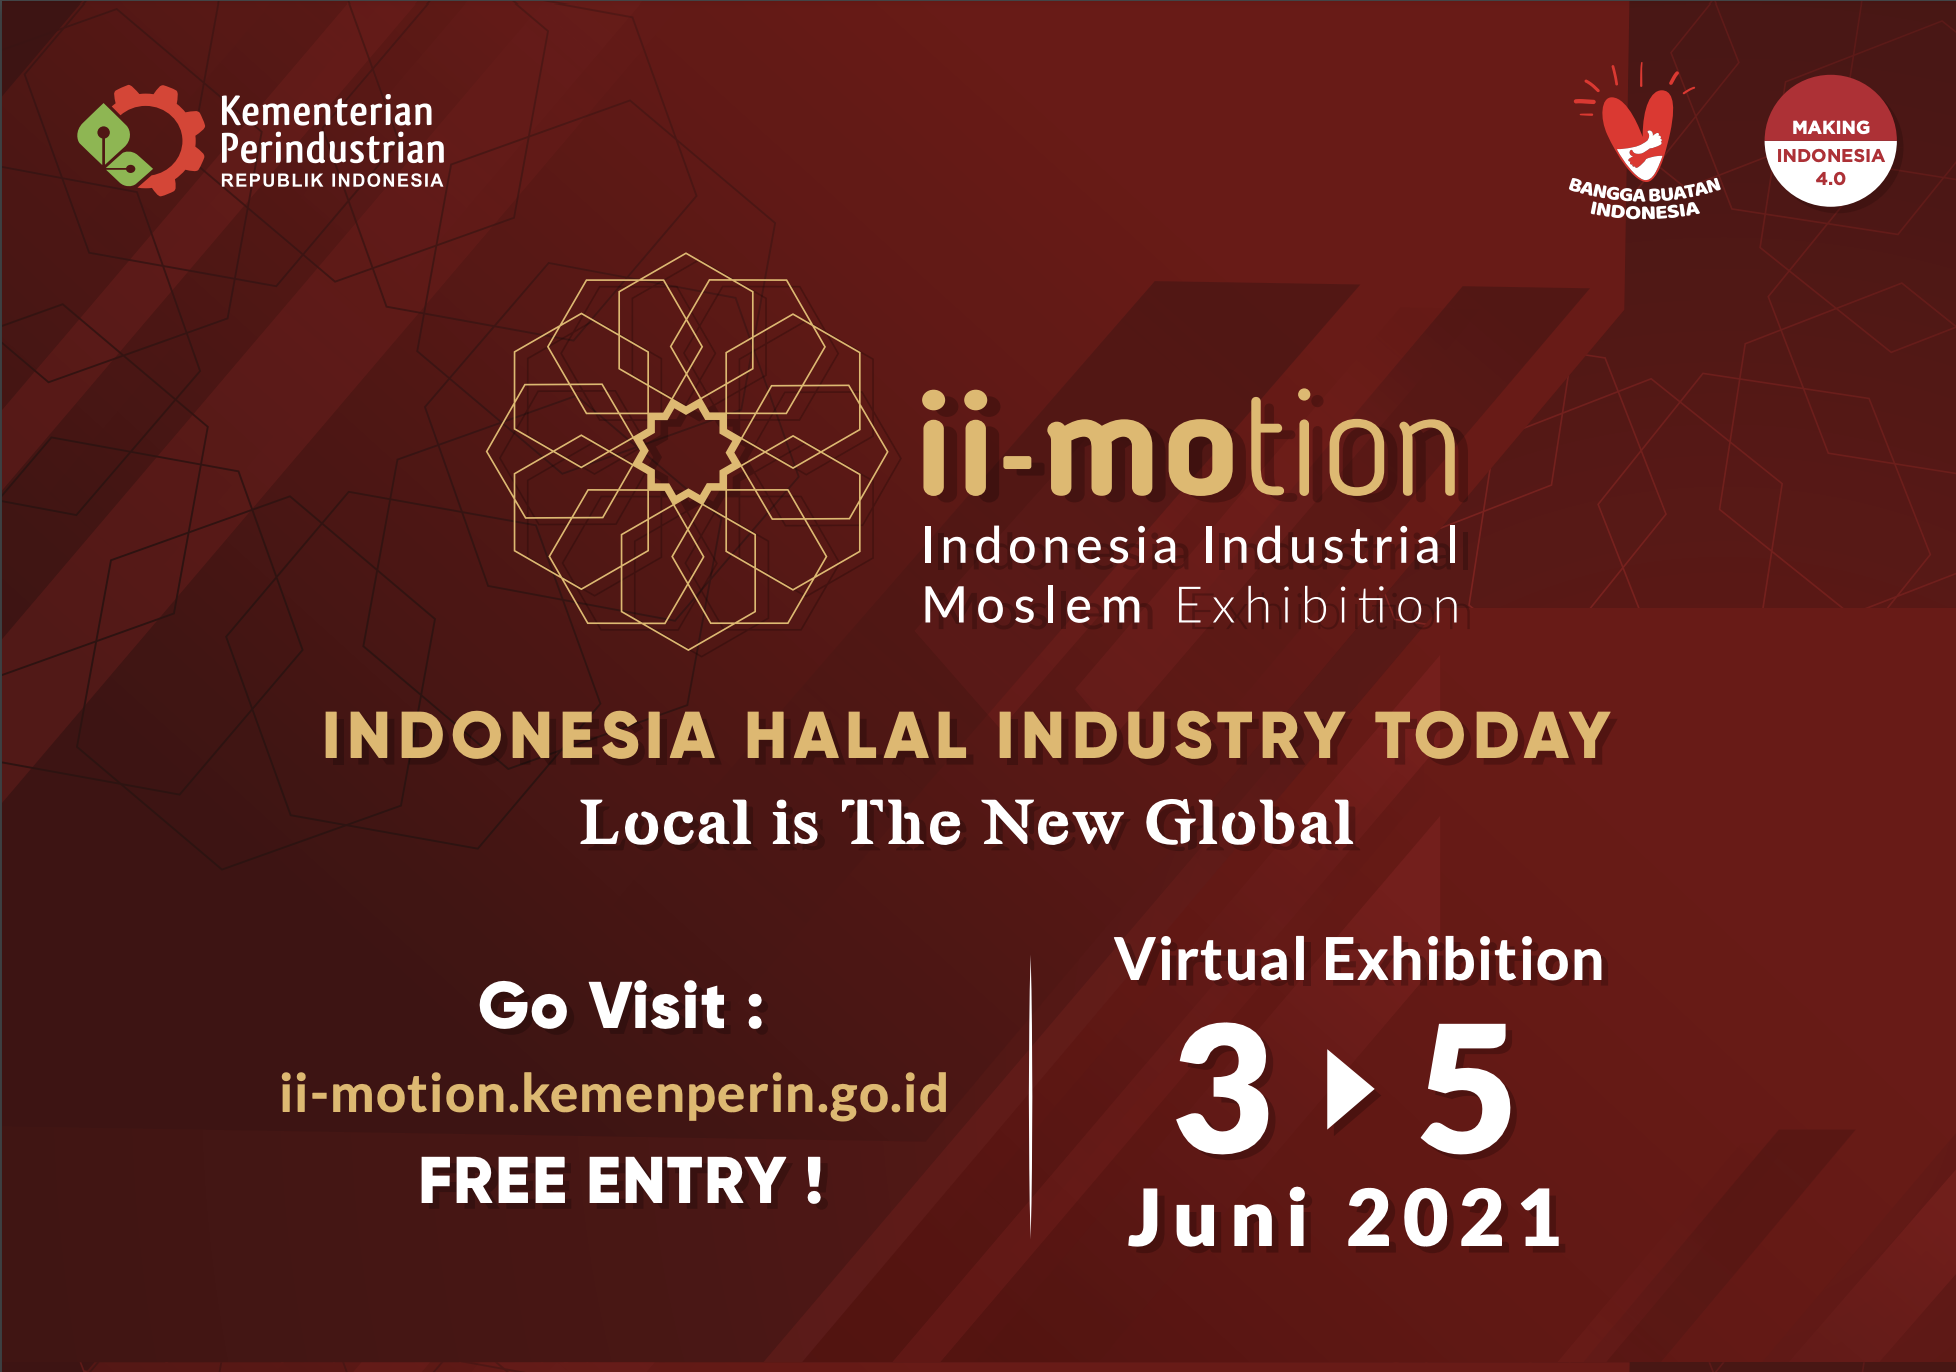  Indonesia Industrial Moslem Exhibition